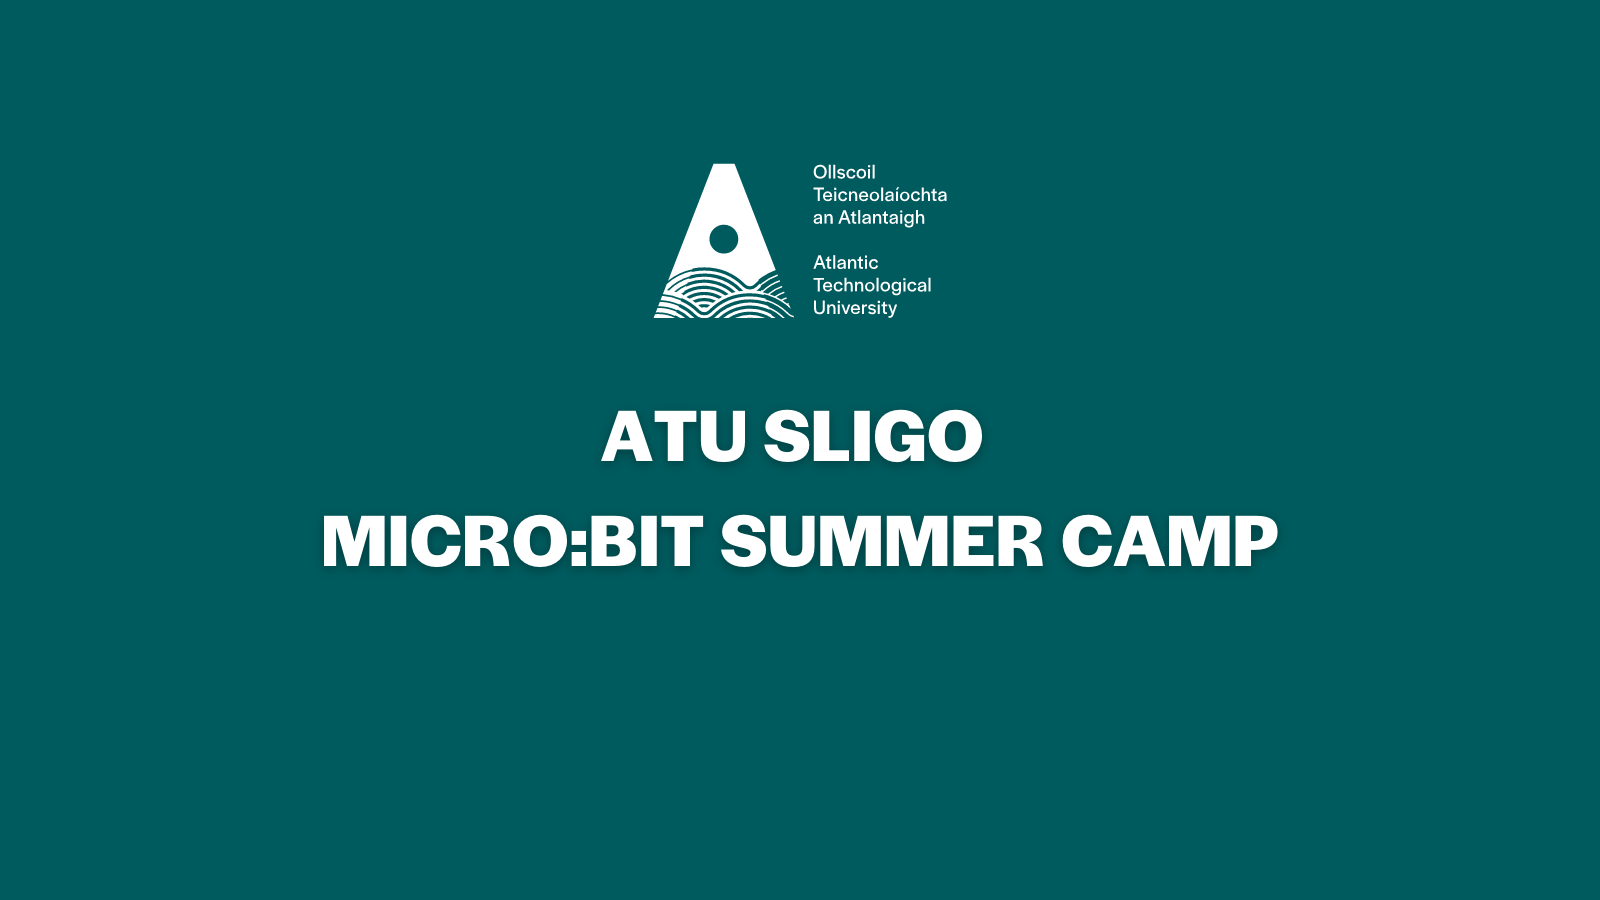 ATU Sligo Micro:bit Summer Camp